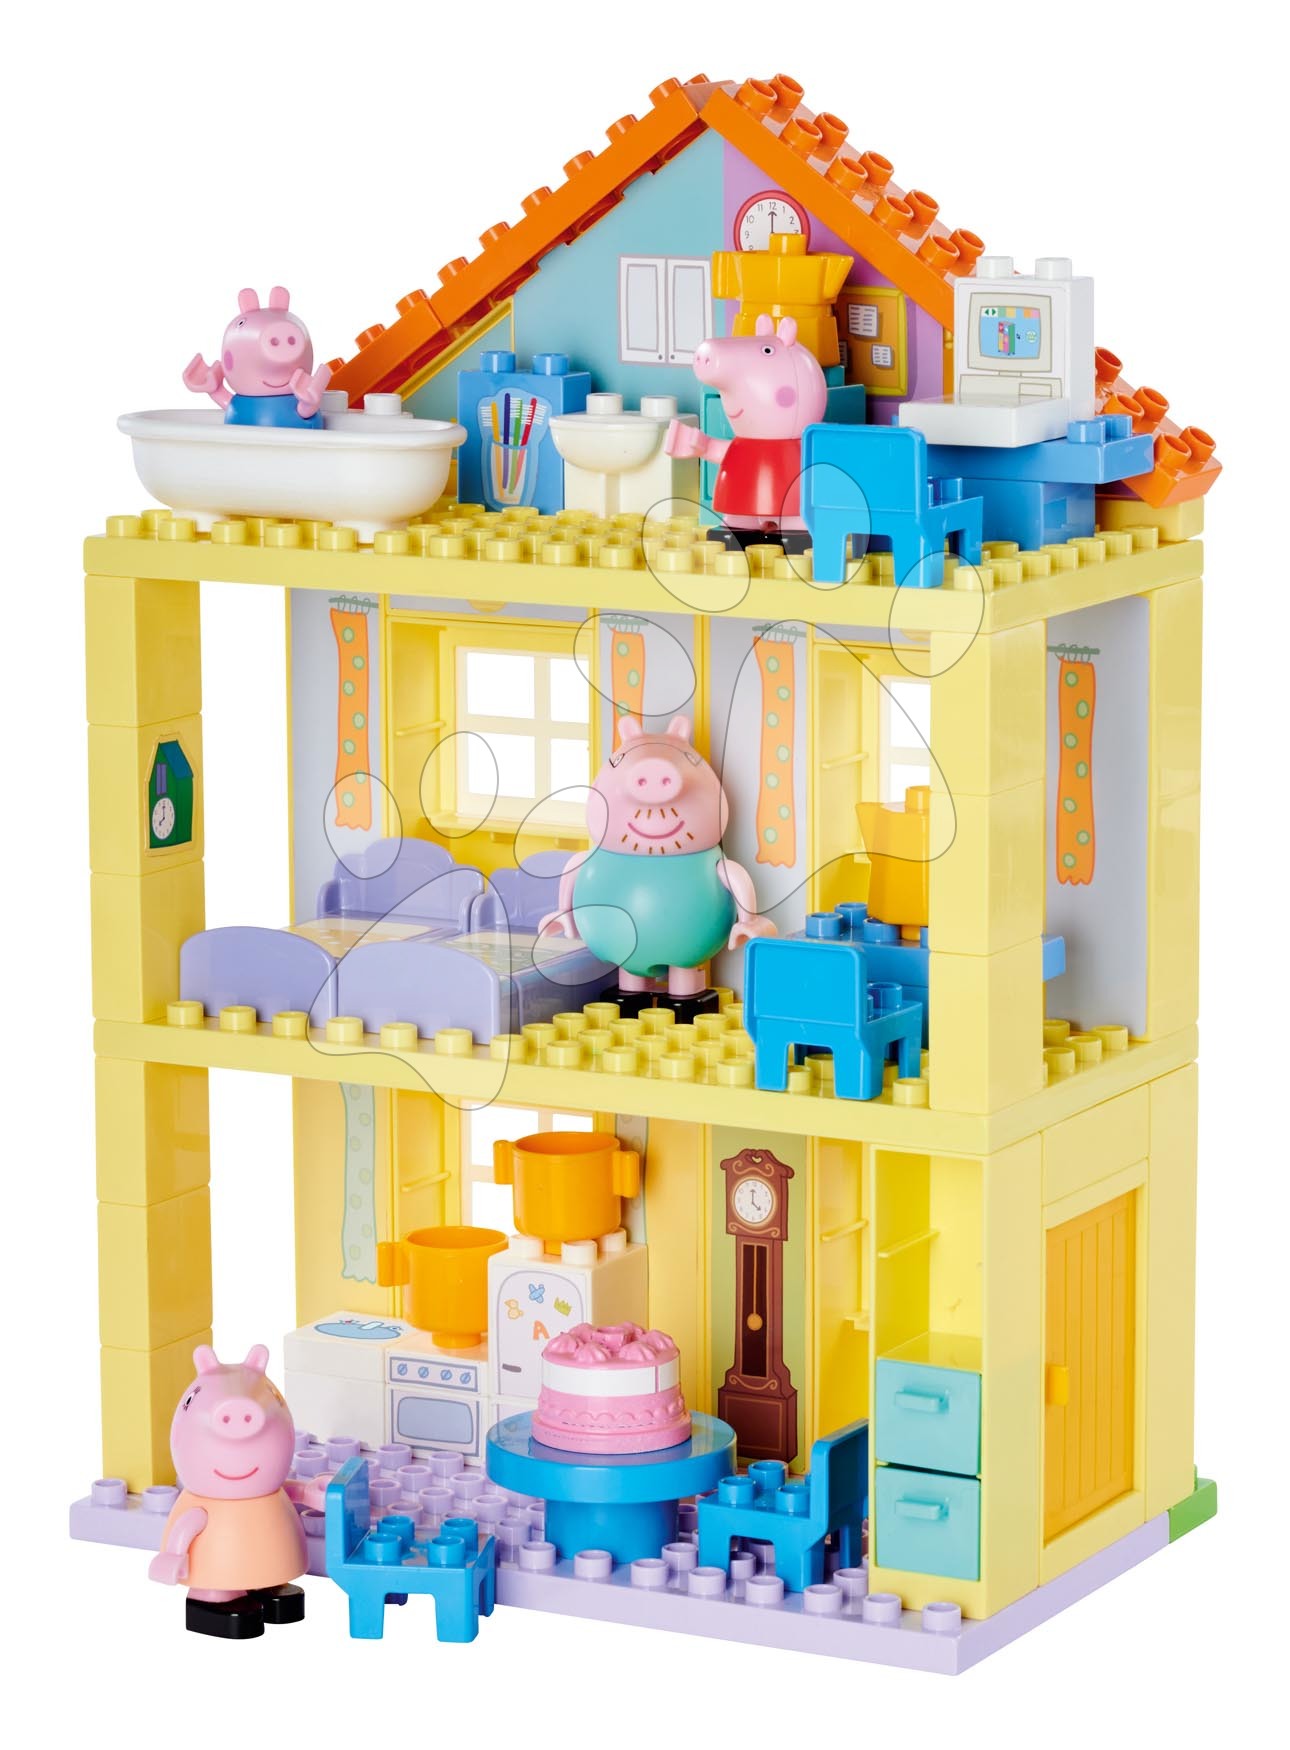 Stavebnice BIG-Bloxx jako lego - Stavebnice Peppa Pig Family House PlayBig Bloxx BIG se 4 figurkami a 3 patry 86 dílů od 1,5-5 let